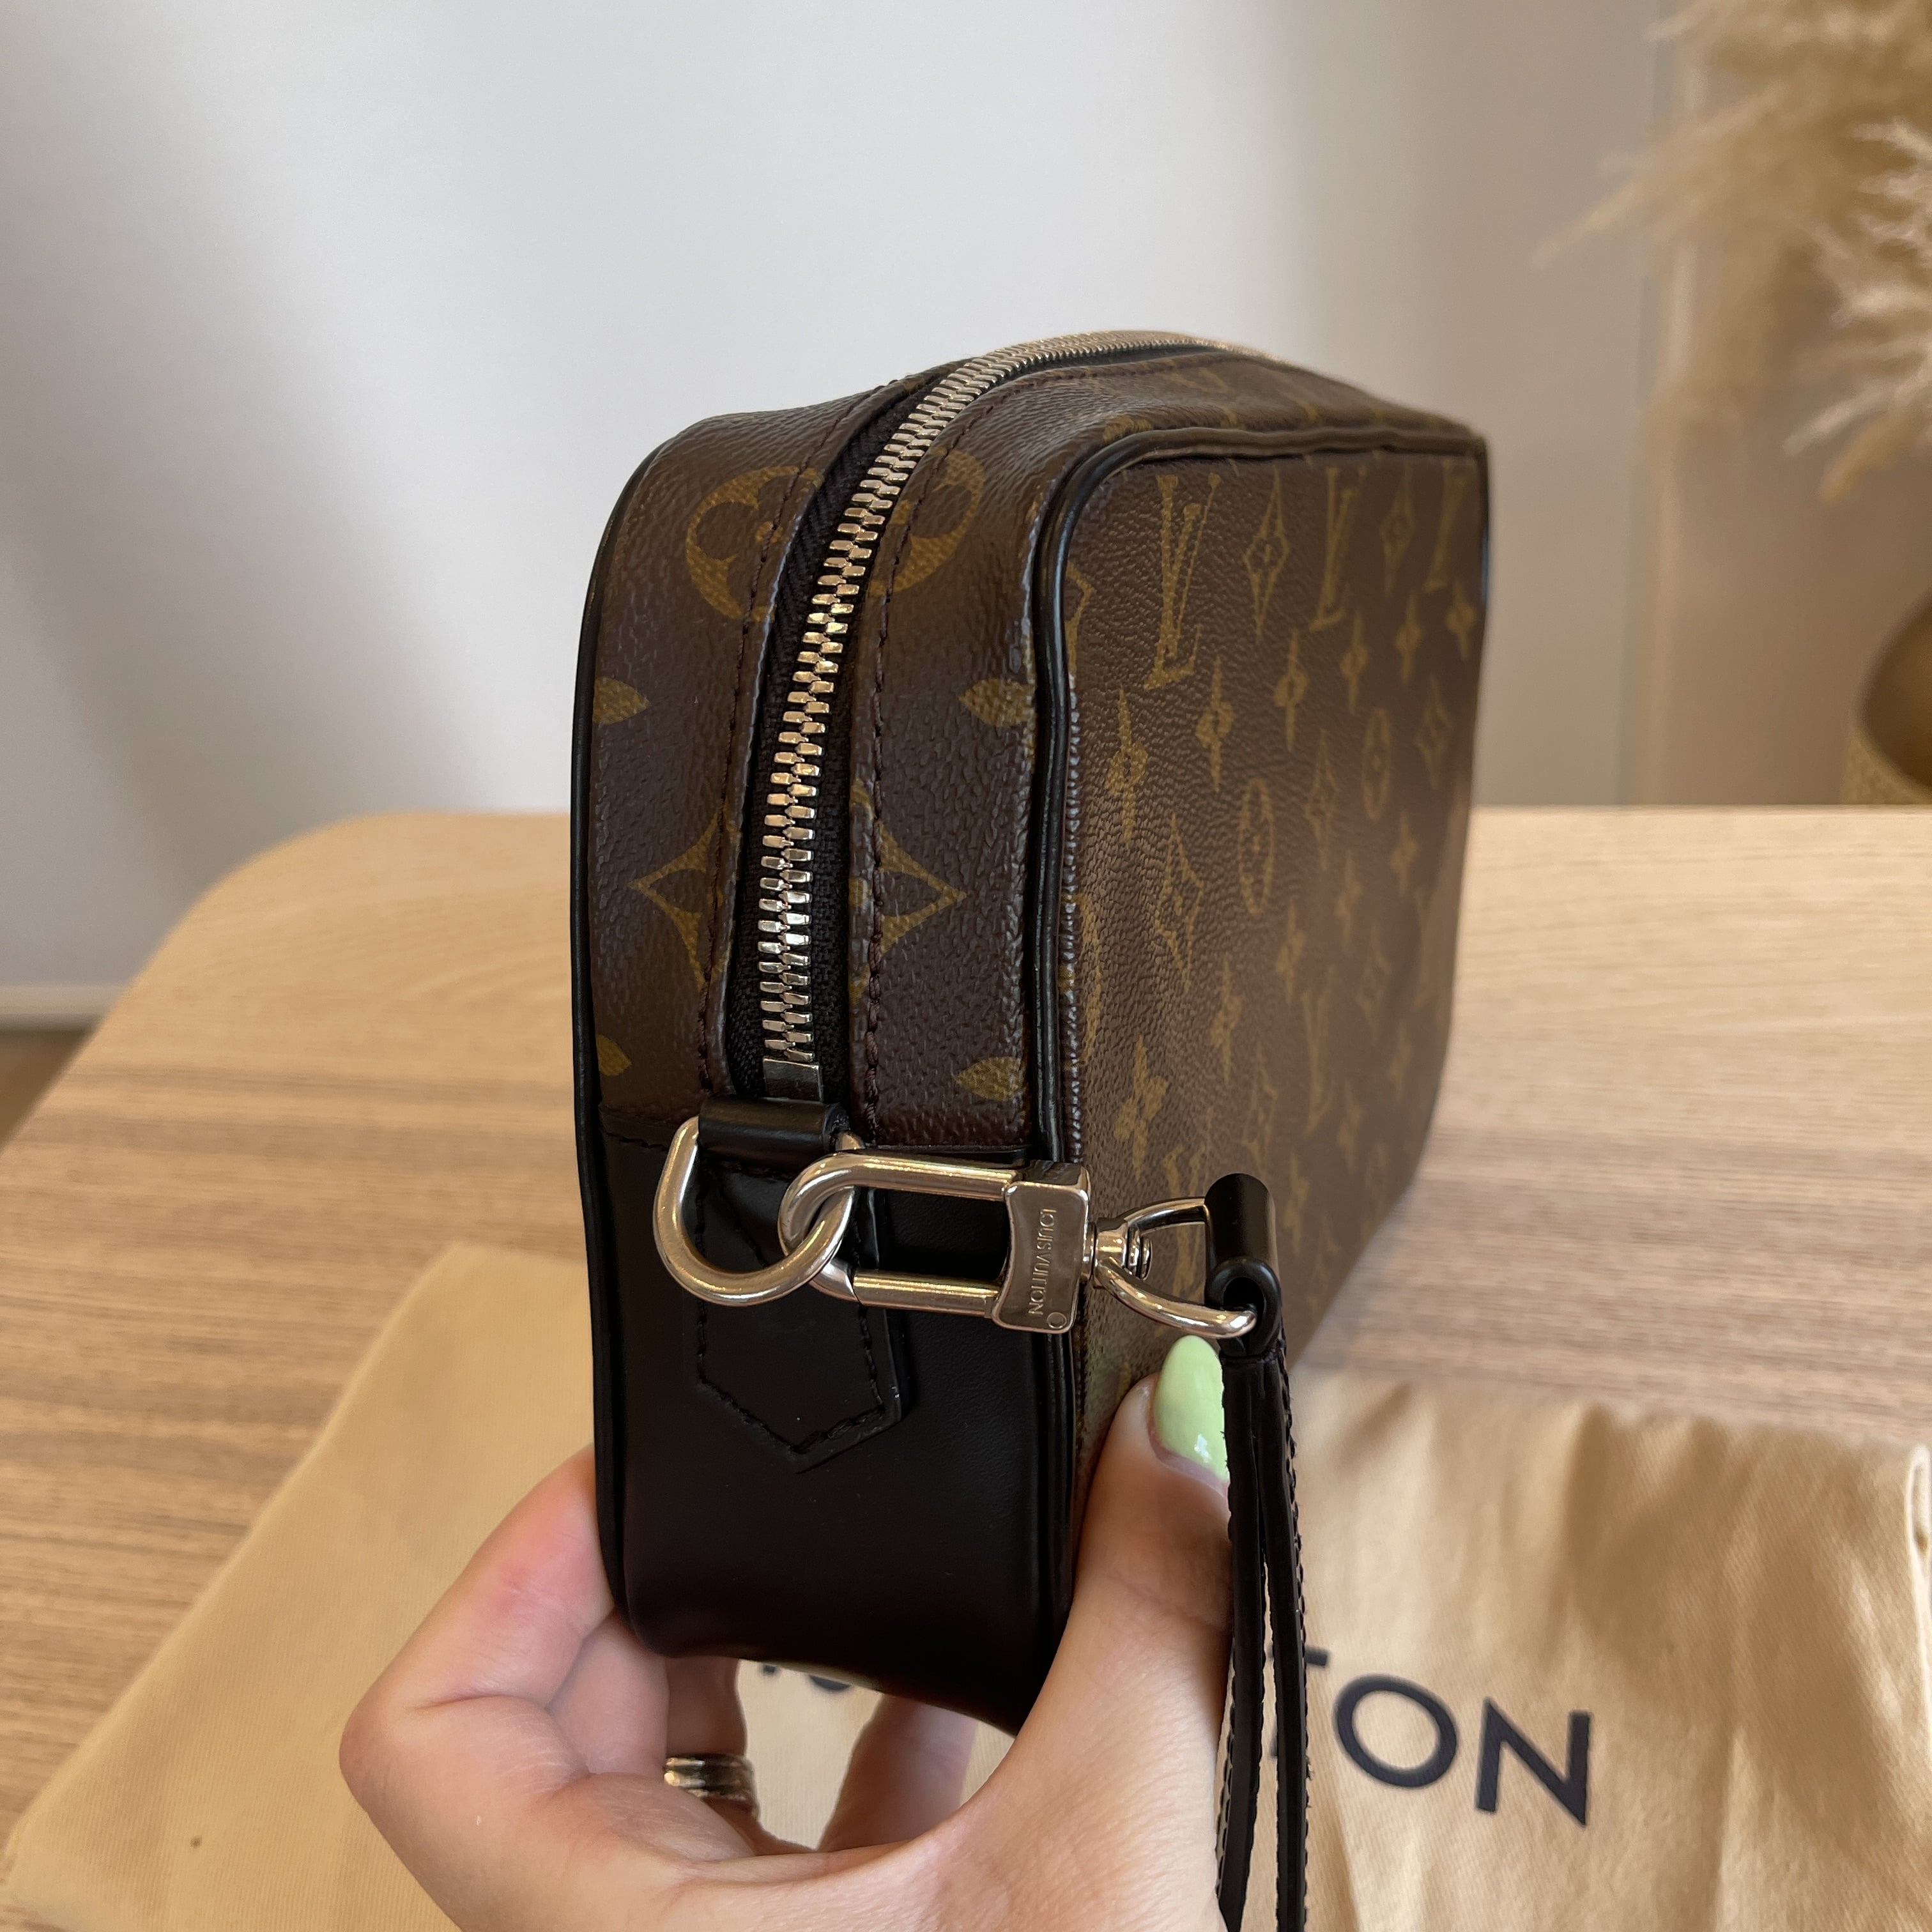 Louis Vuitton KASAI CLUTCH handbag - original!